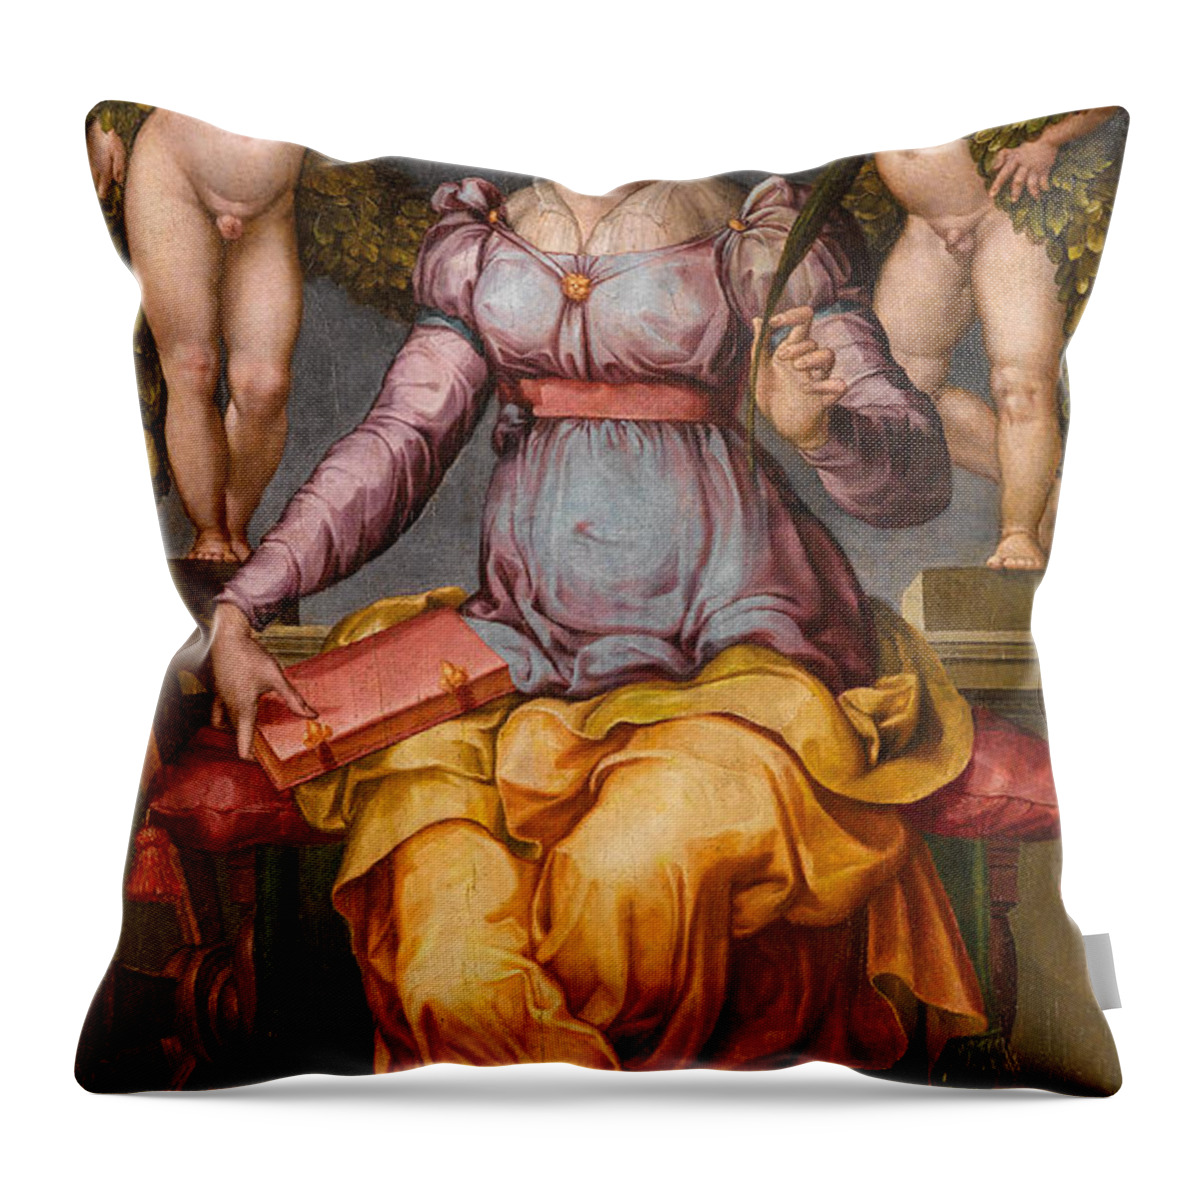 Raffaellino Del Colle Throw Pillow featuring the painting Saint Catherine of Alexandria crowned by two angels by Raffaellino del Colle